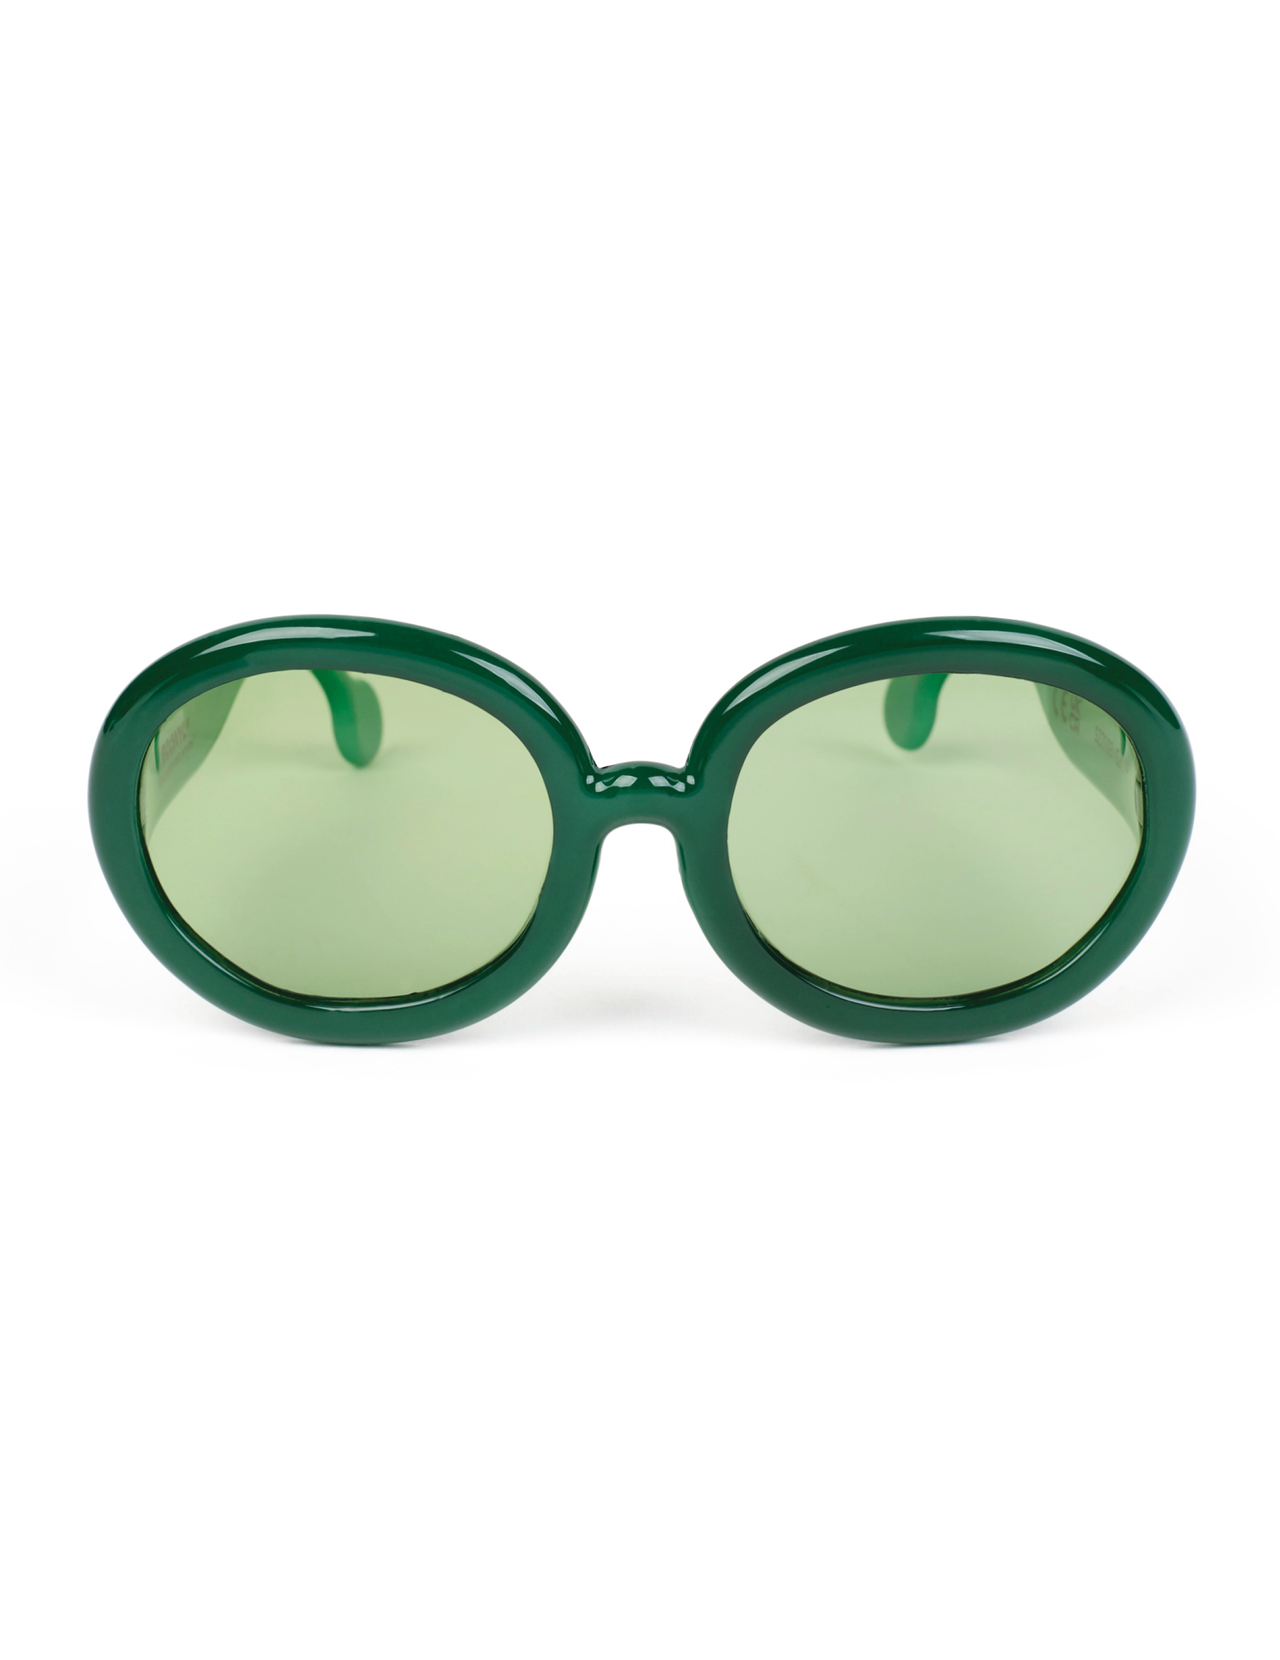 The Animals Observatory - Green Circular Sunglasses